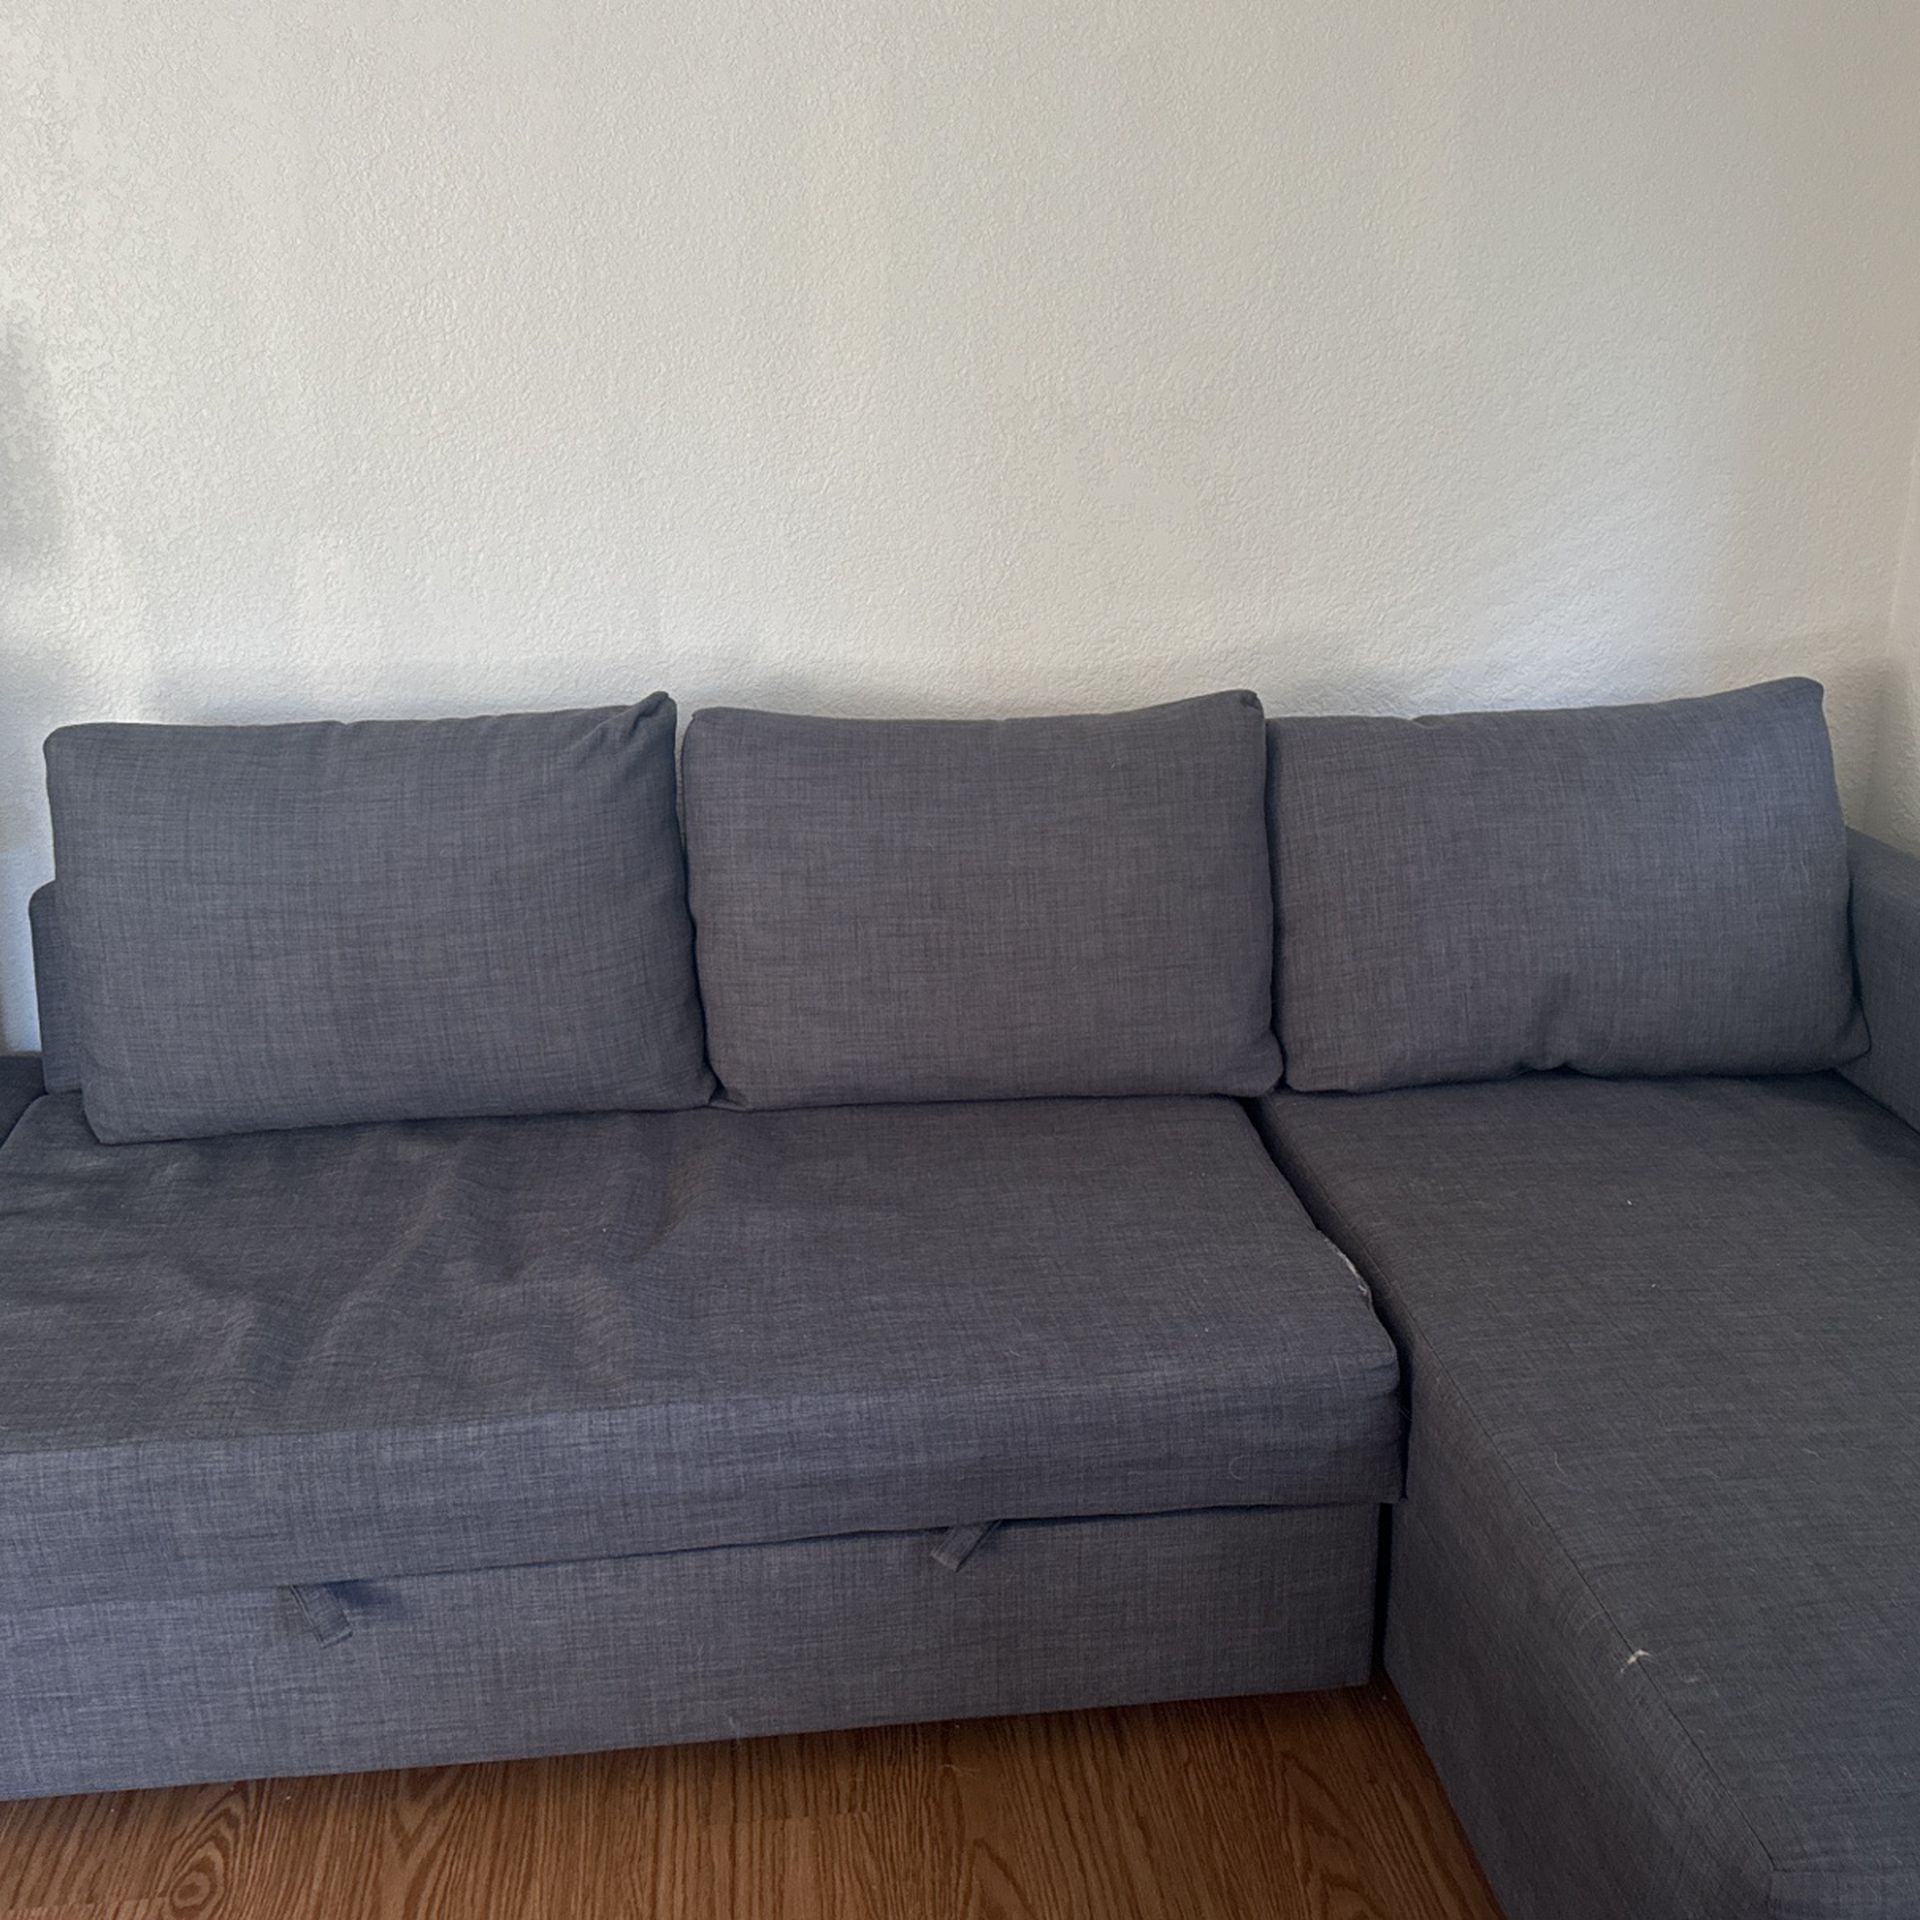 IKEA FRIHETEN Sleeper sectional,3 seat w/storage, Skiftebo dark gray/